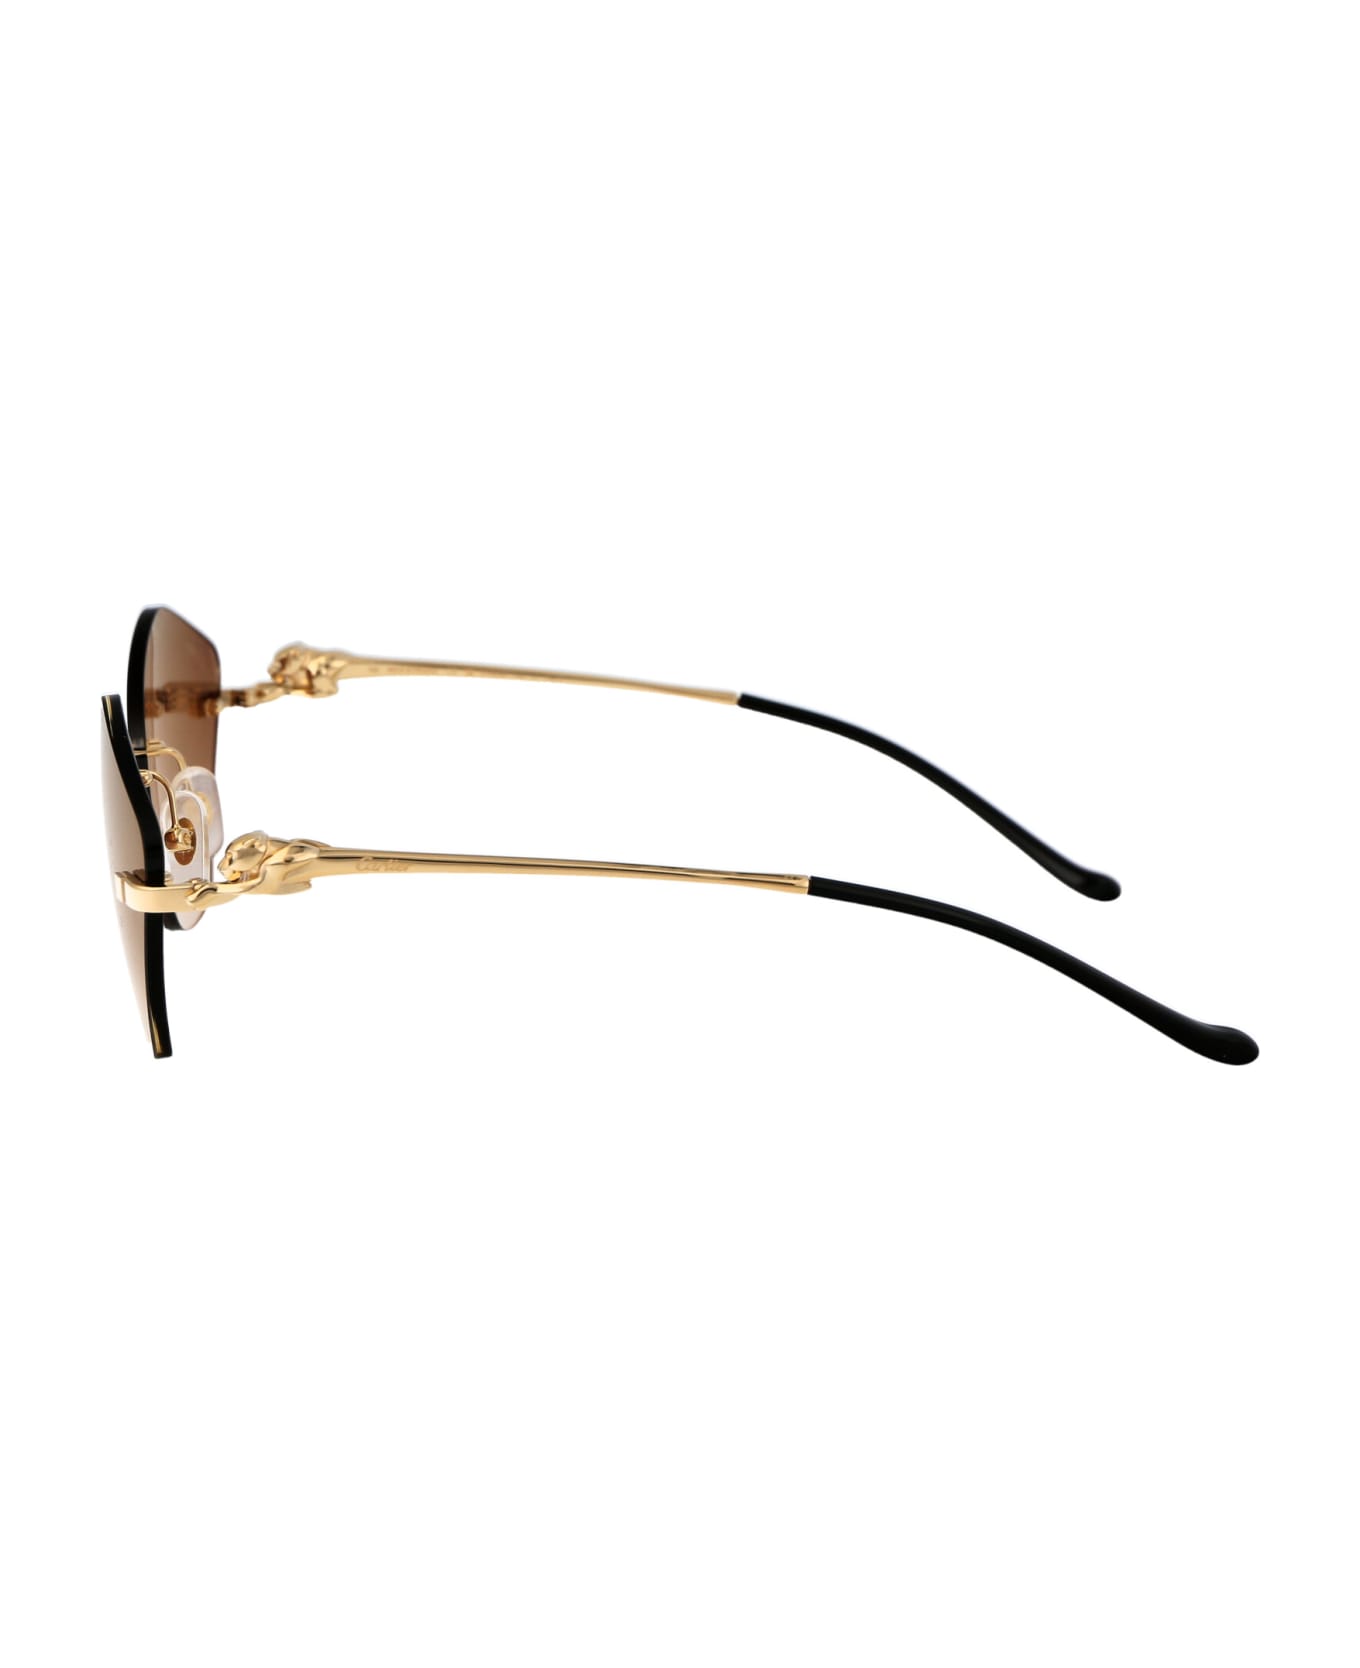 Cartier Eyewear Ct0429s Sunglasses - 002 GOLD GOLD BROWN